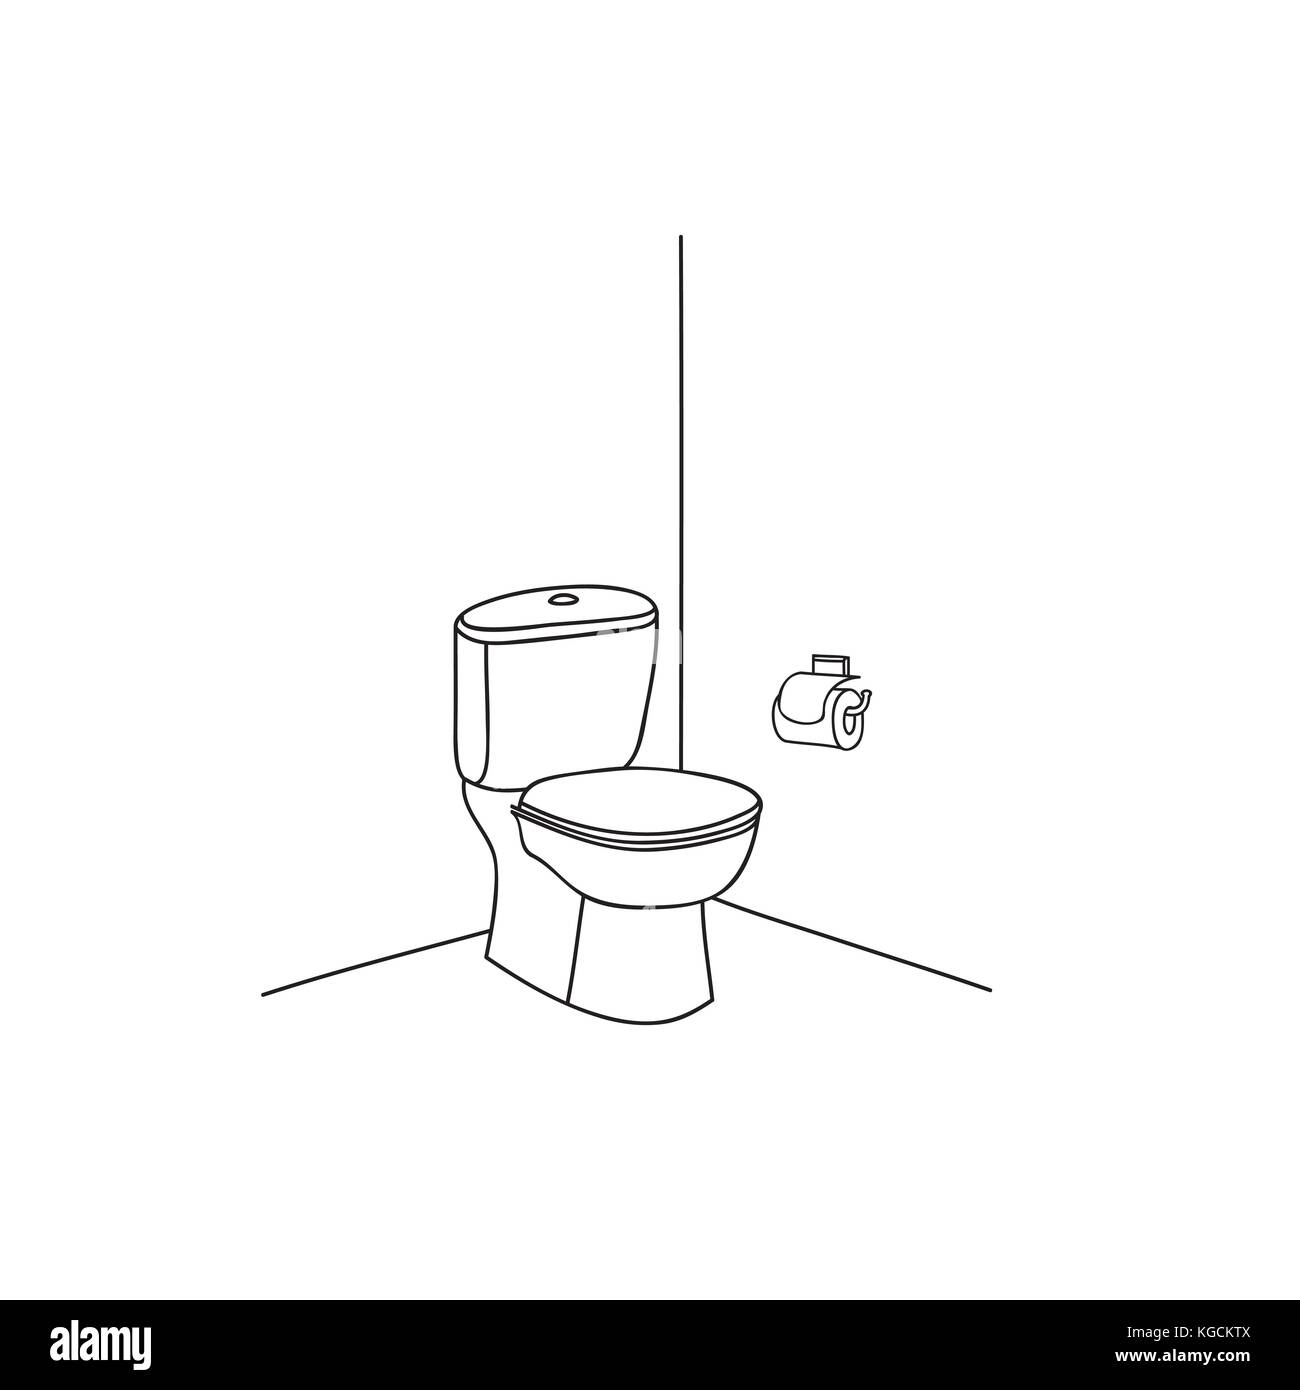 Toilet room furniture. Bathroom interior line sketch. Stock Vector